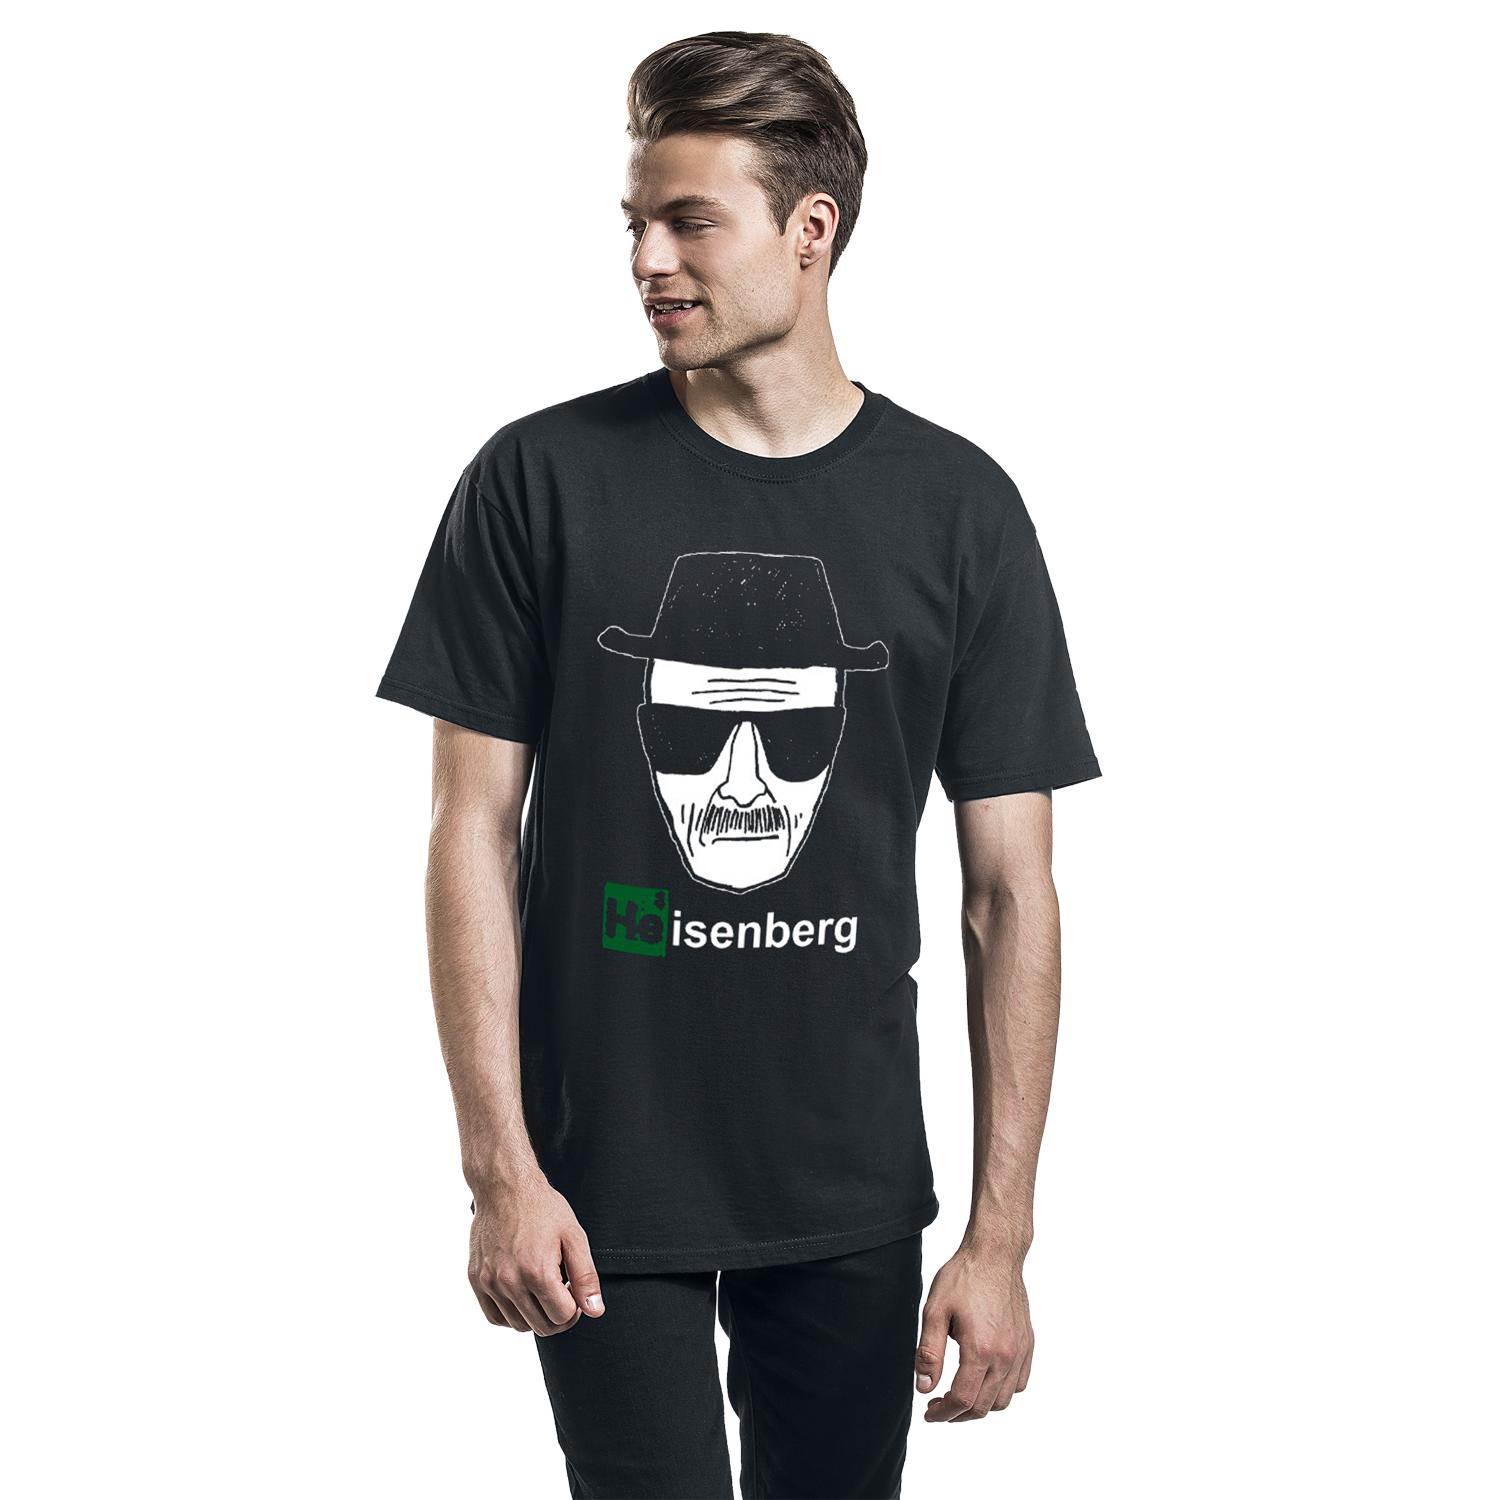 Heisenberg T-shirt Design man